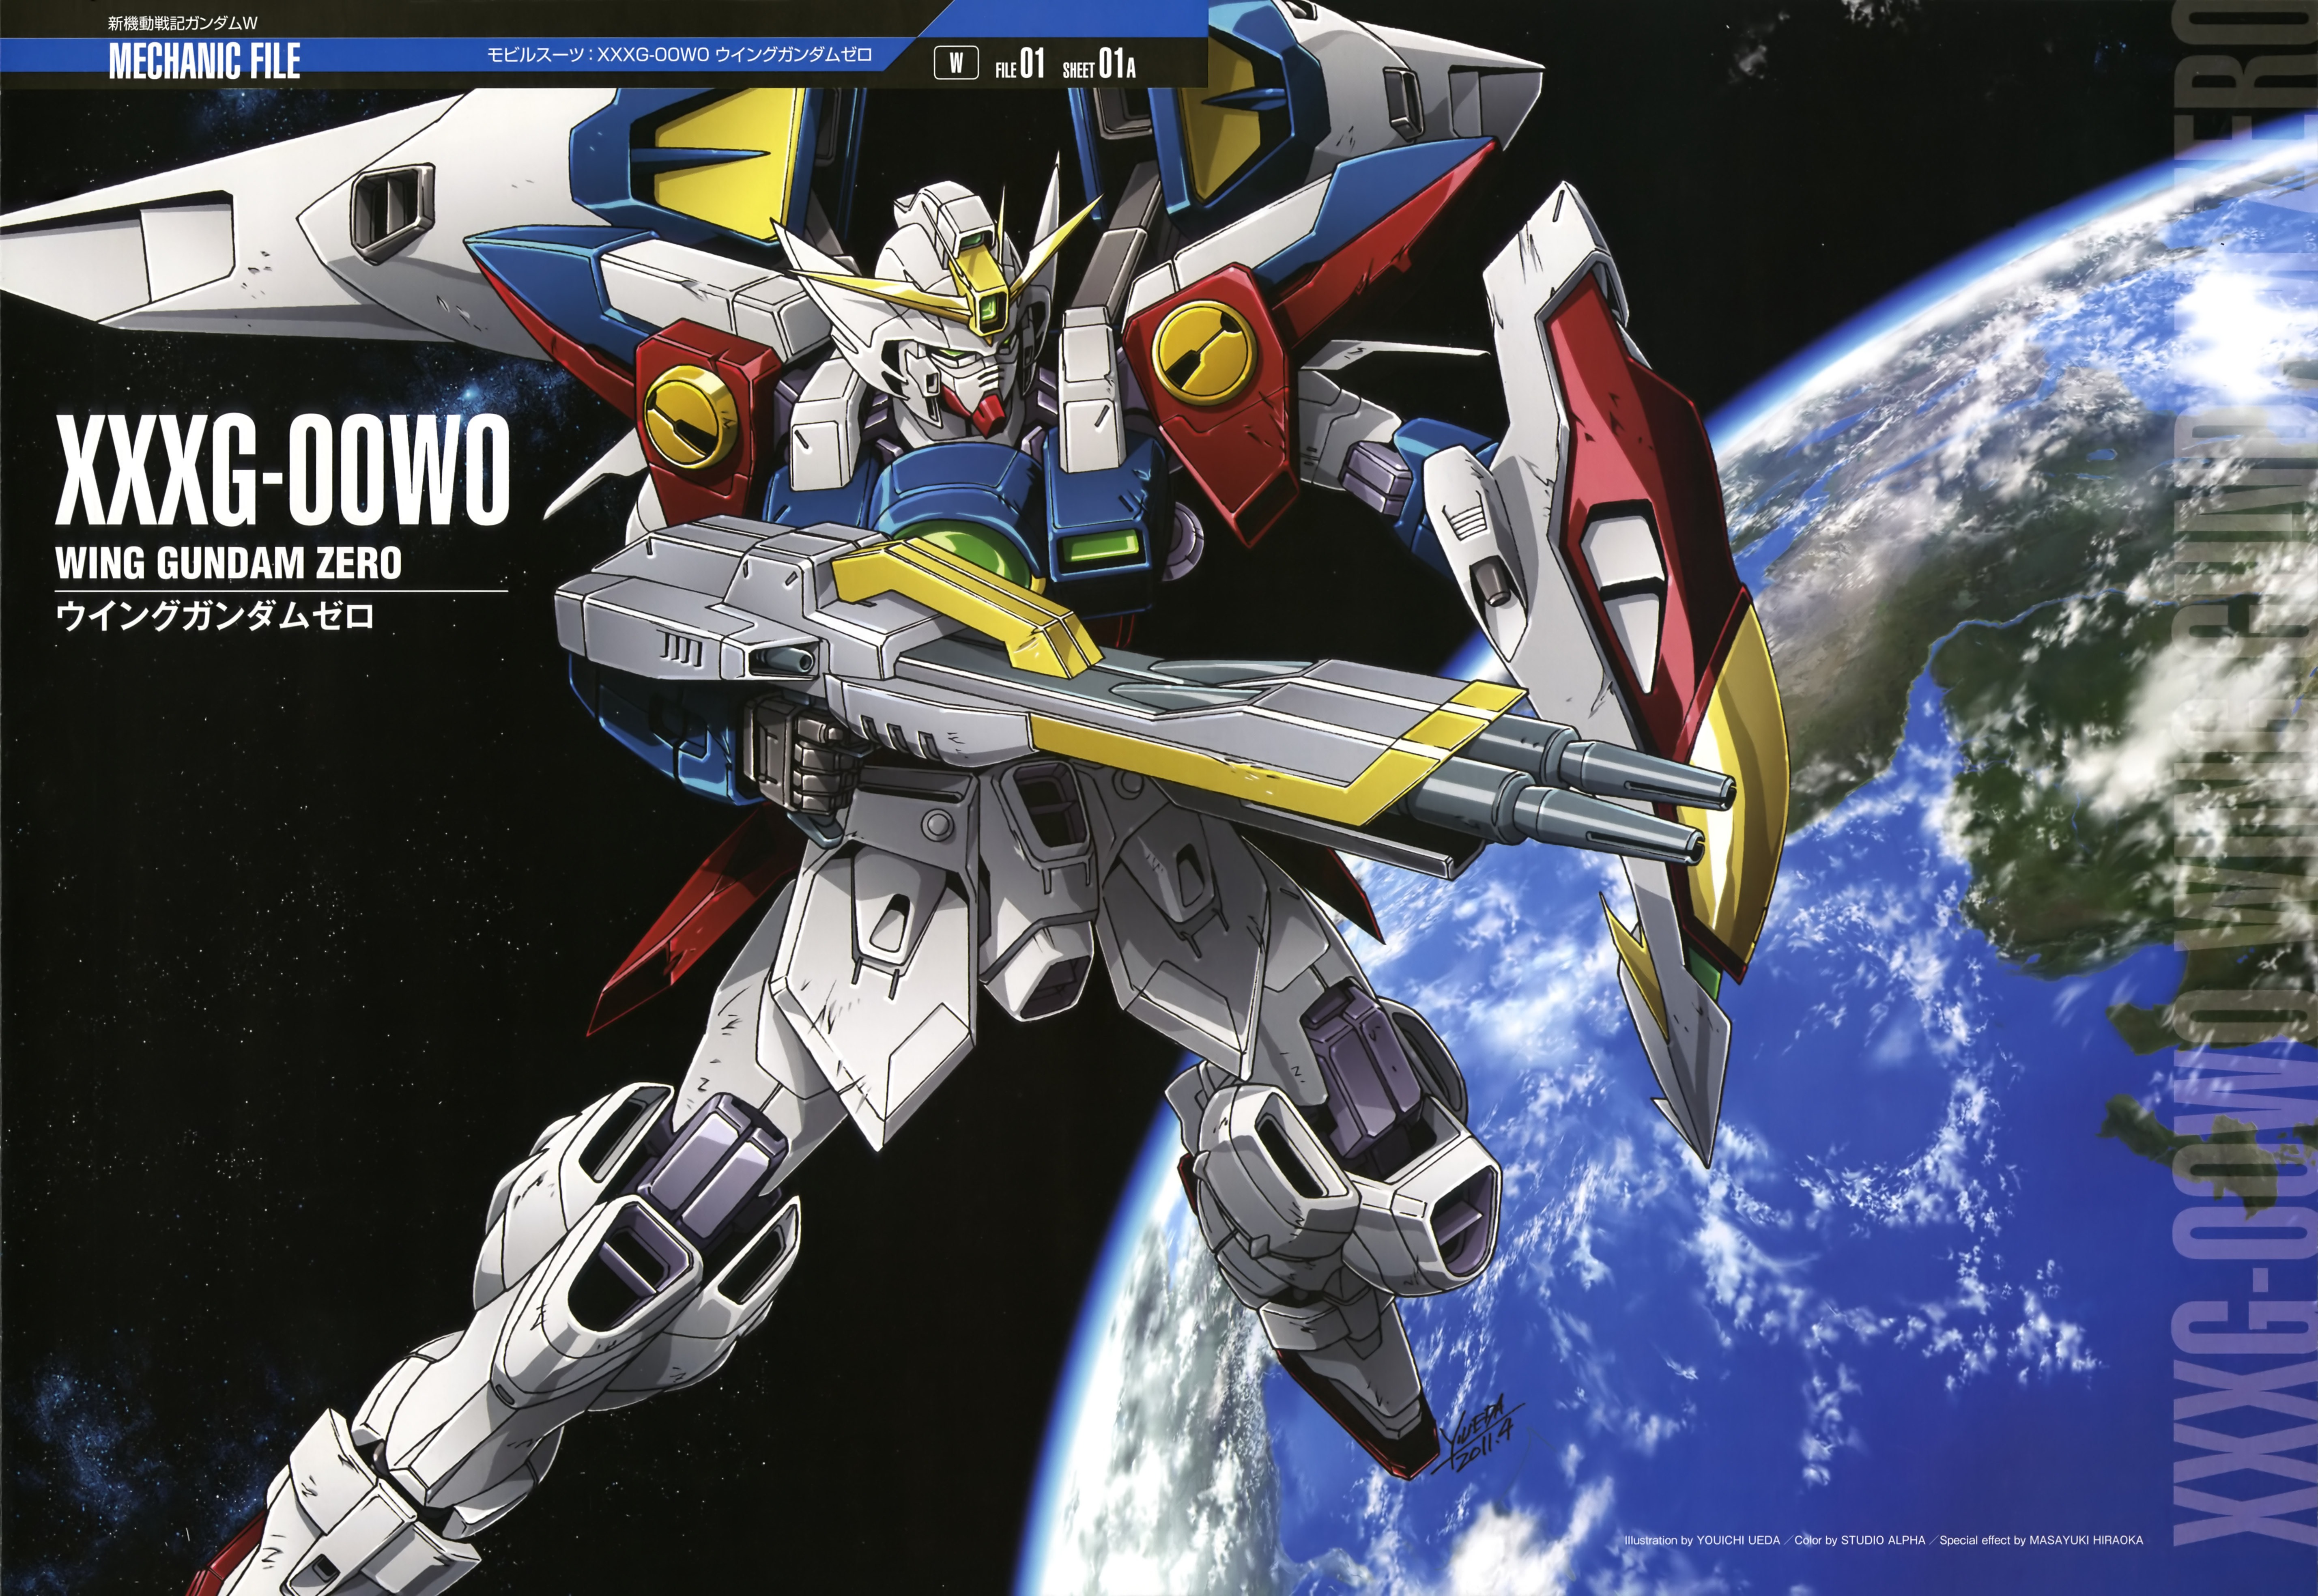 Anime Mech Gundam Mobile Suit Gundam Wing Super Robot Wars Wing Gundam Zero Artwork Digital Art Offi 5714x3934